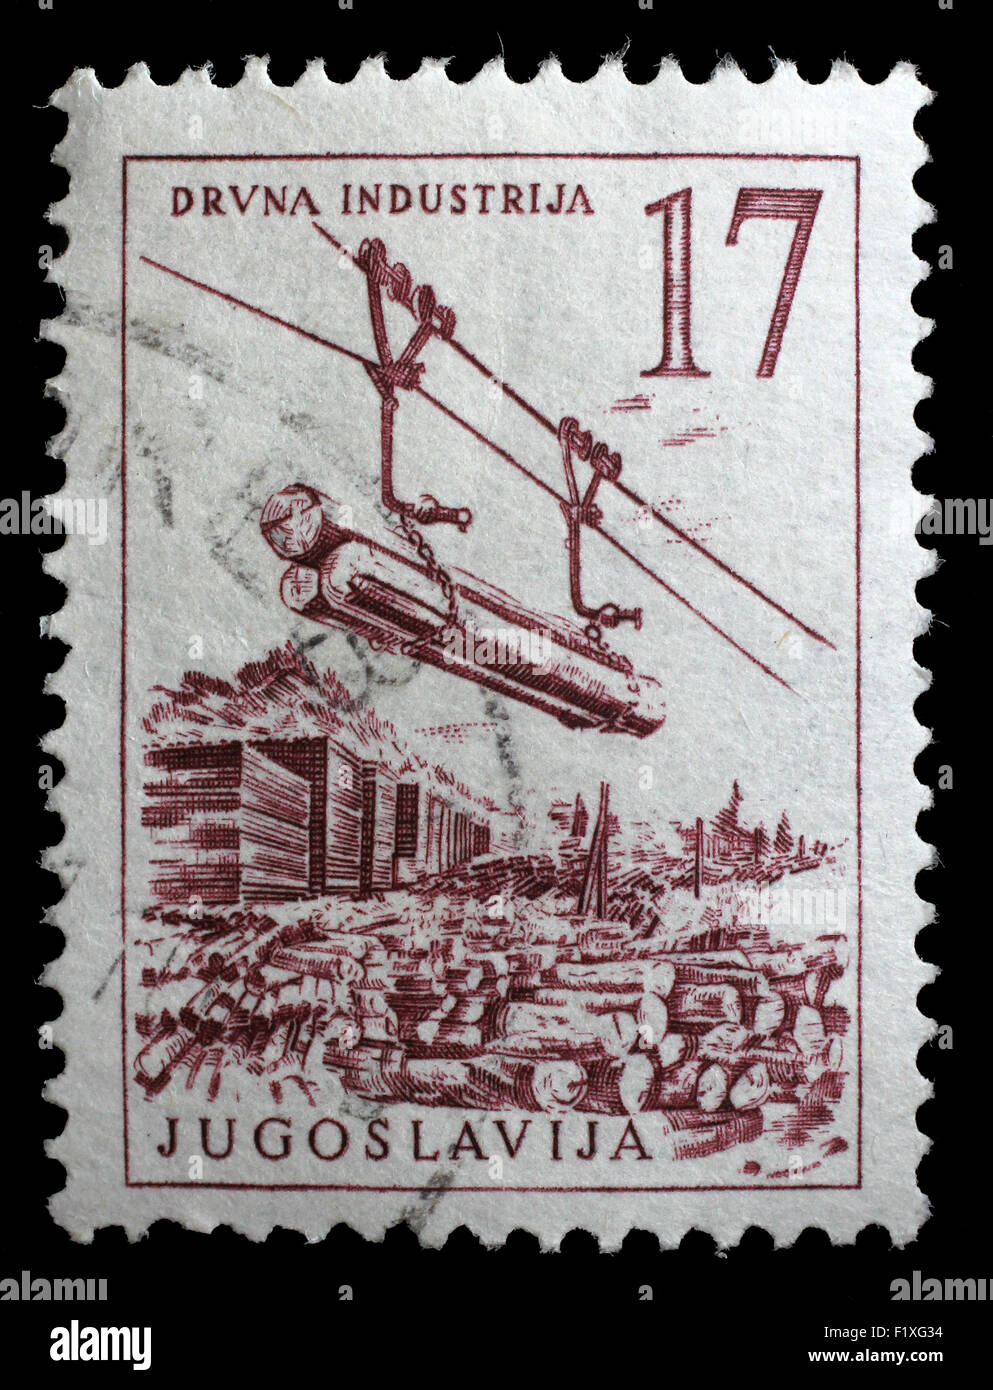 Sello impreso en Yugoslavia muestra industria maderera, circa 1958 Foto de stock